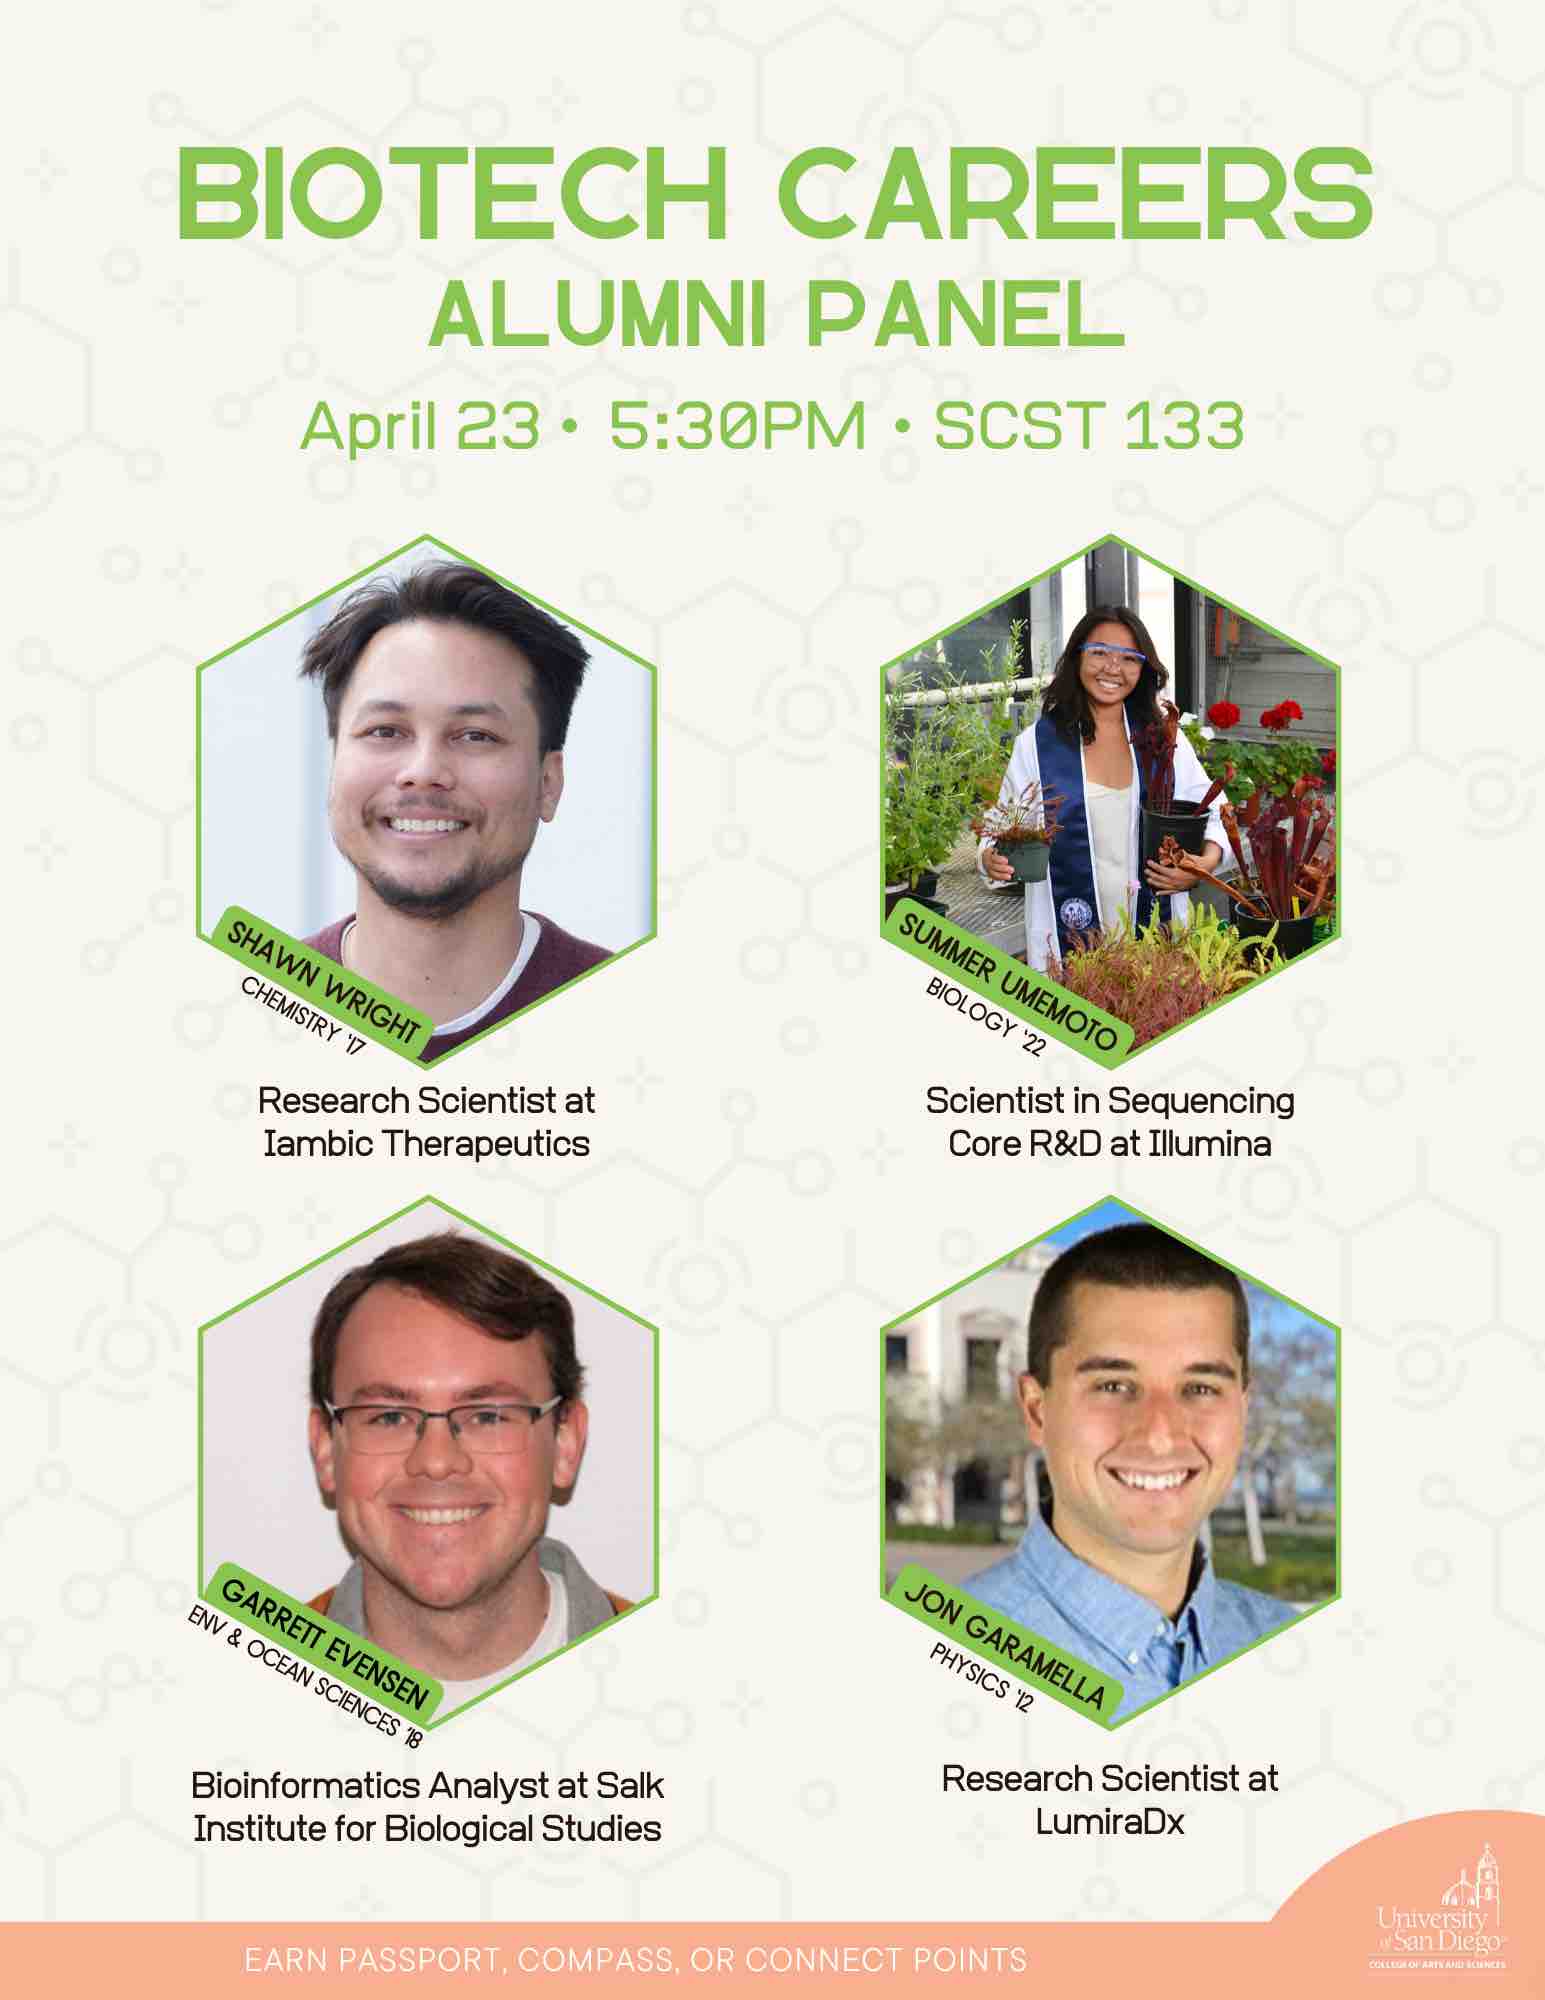 Biotech careers alumni panel - April 23 5:30PM SCST 133 with Shawn Wright, Summer Umemoto, Jon Garamella, Garrett Evansen